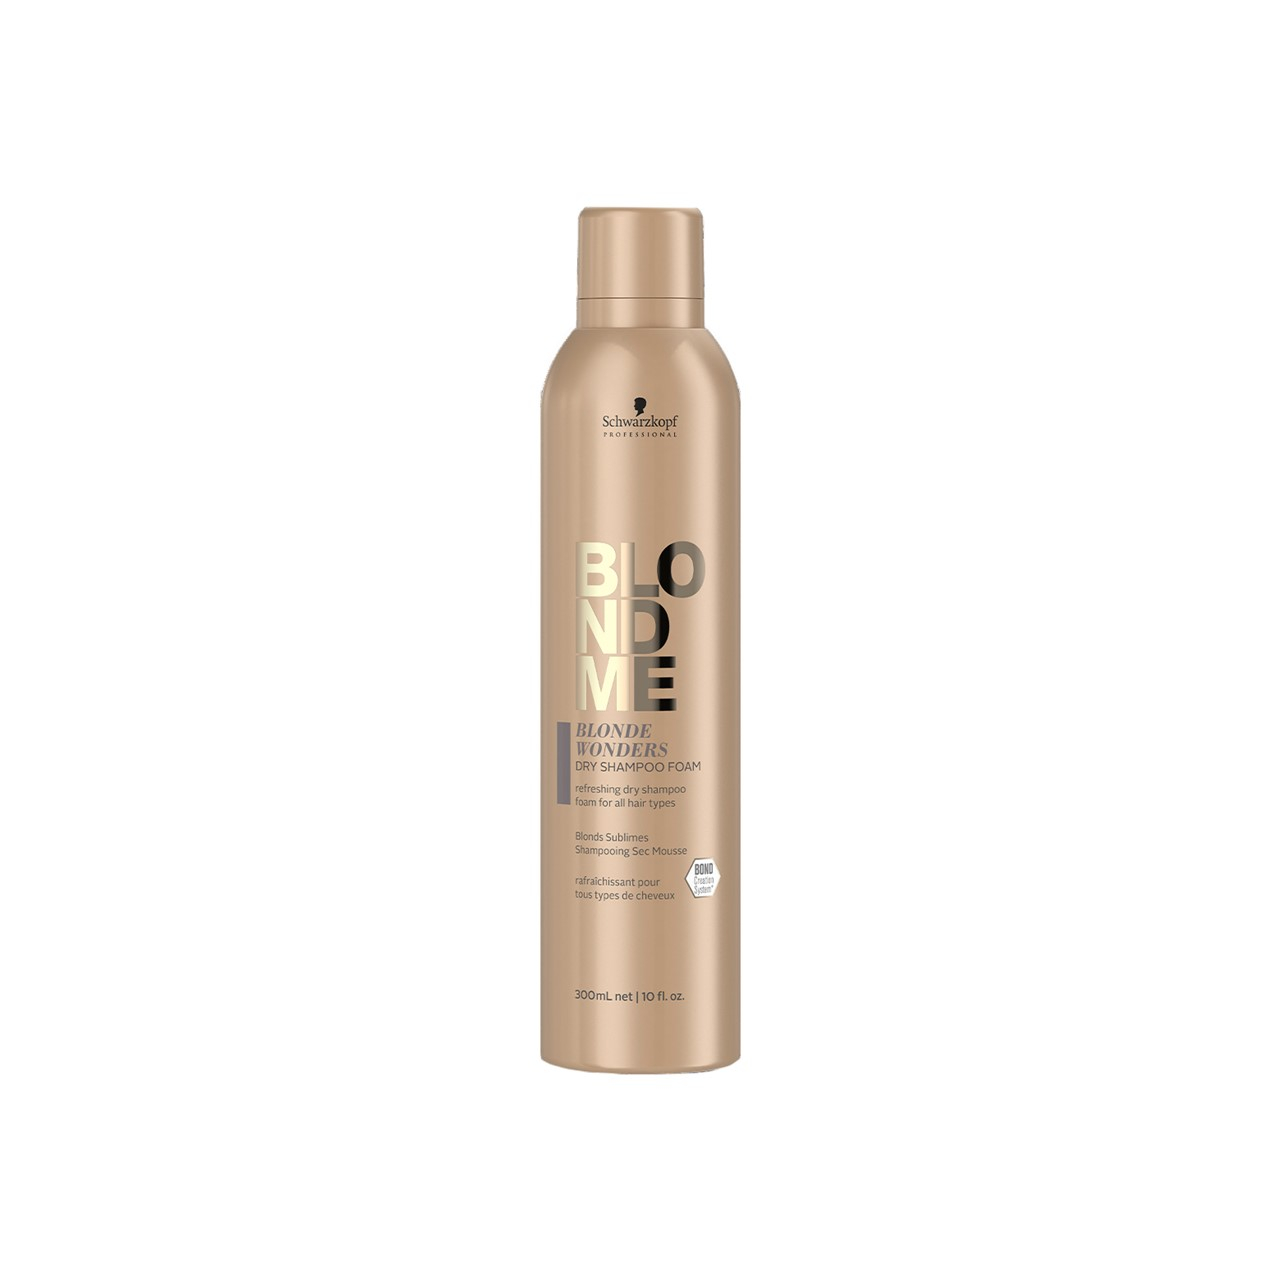 Schwarzkopf BLONDME Blonde Wonders Dry Shampoo Foam 300ml (10.14fl oz)